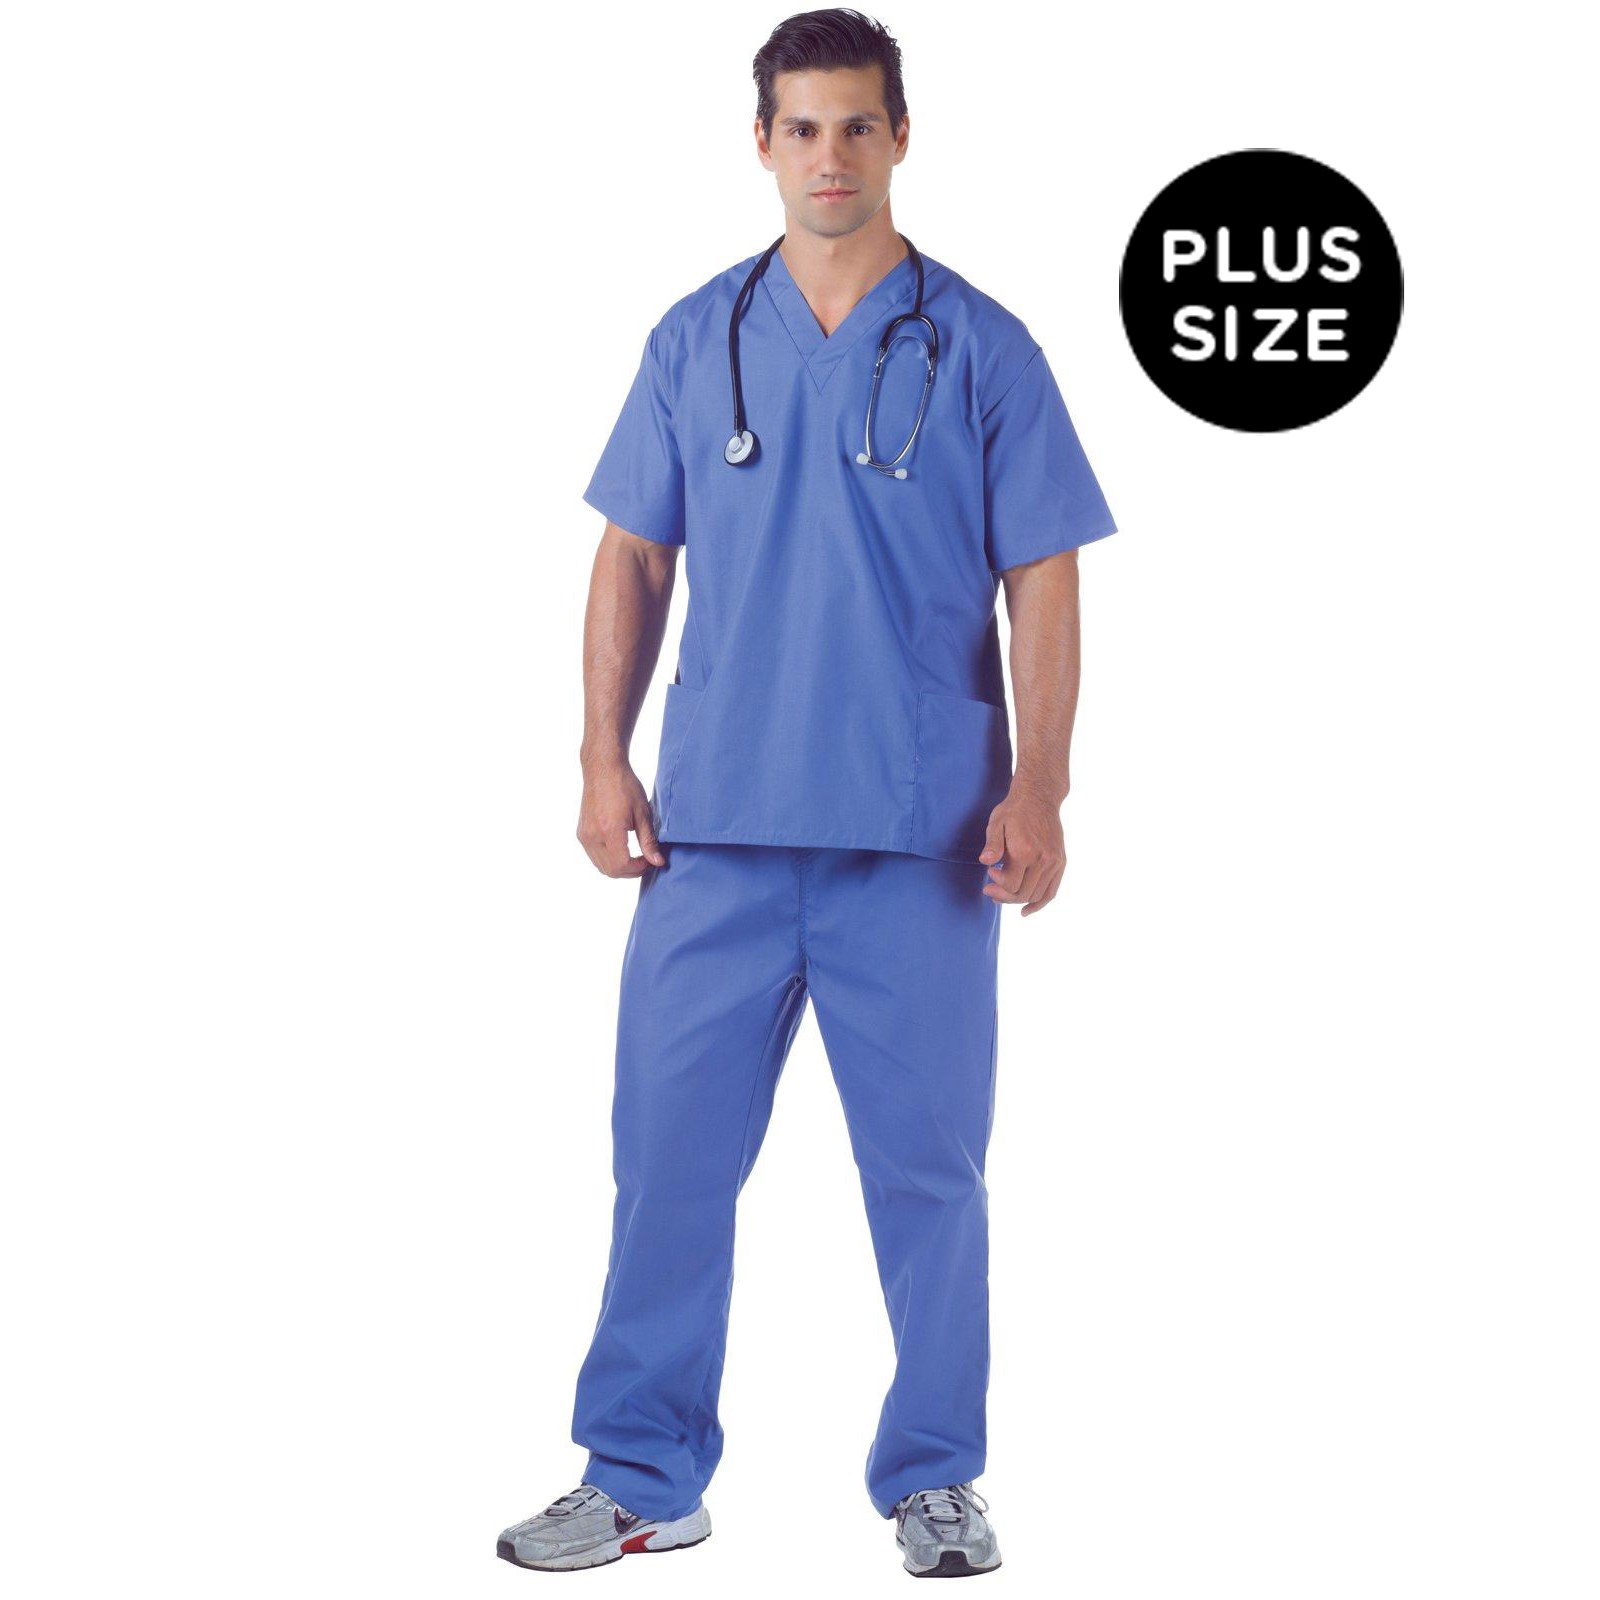 Hospital Scrubs - Plus Size Adult Costume